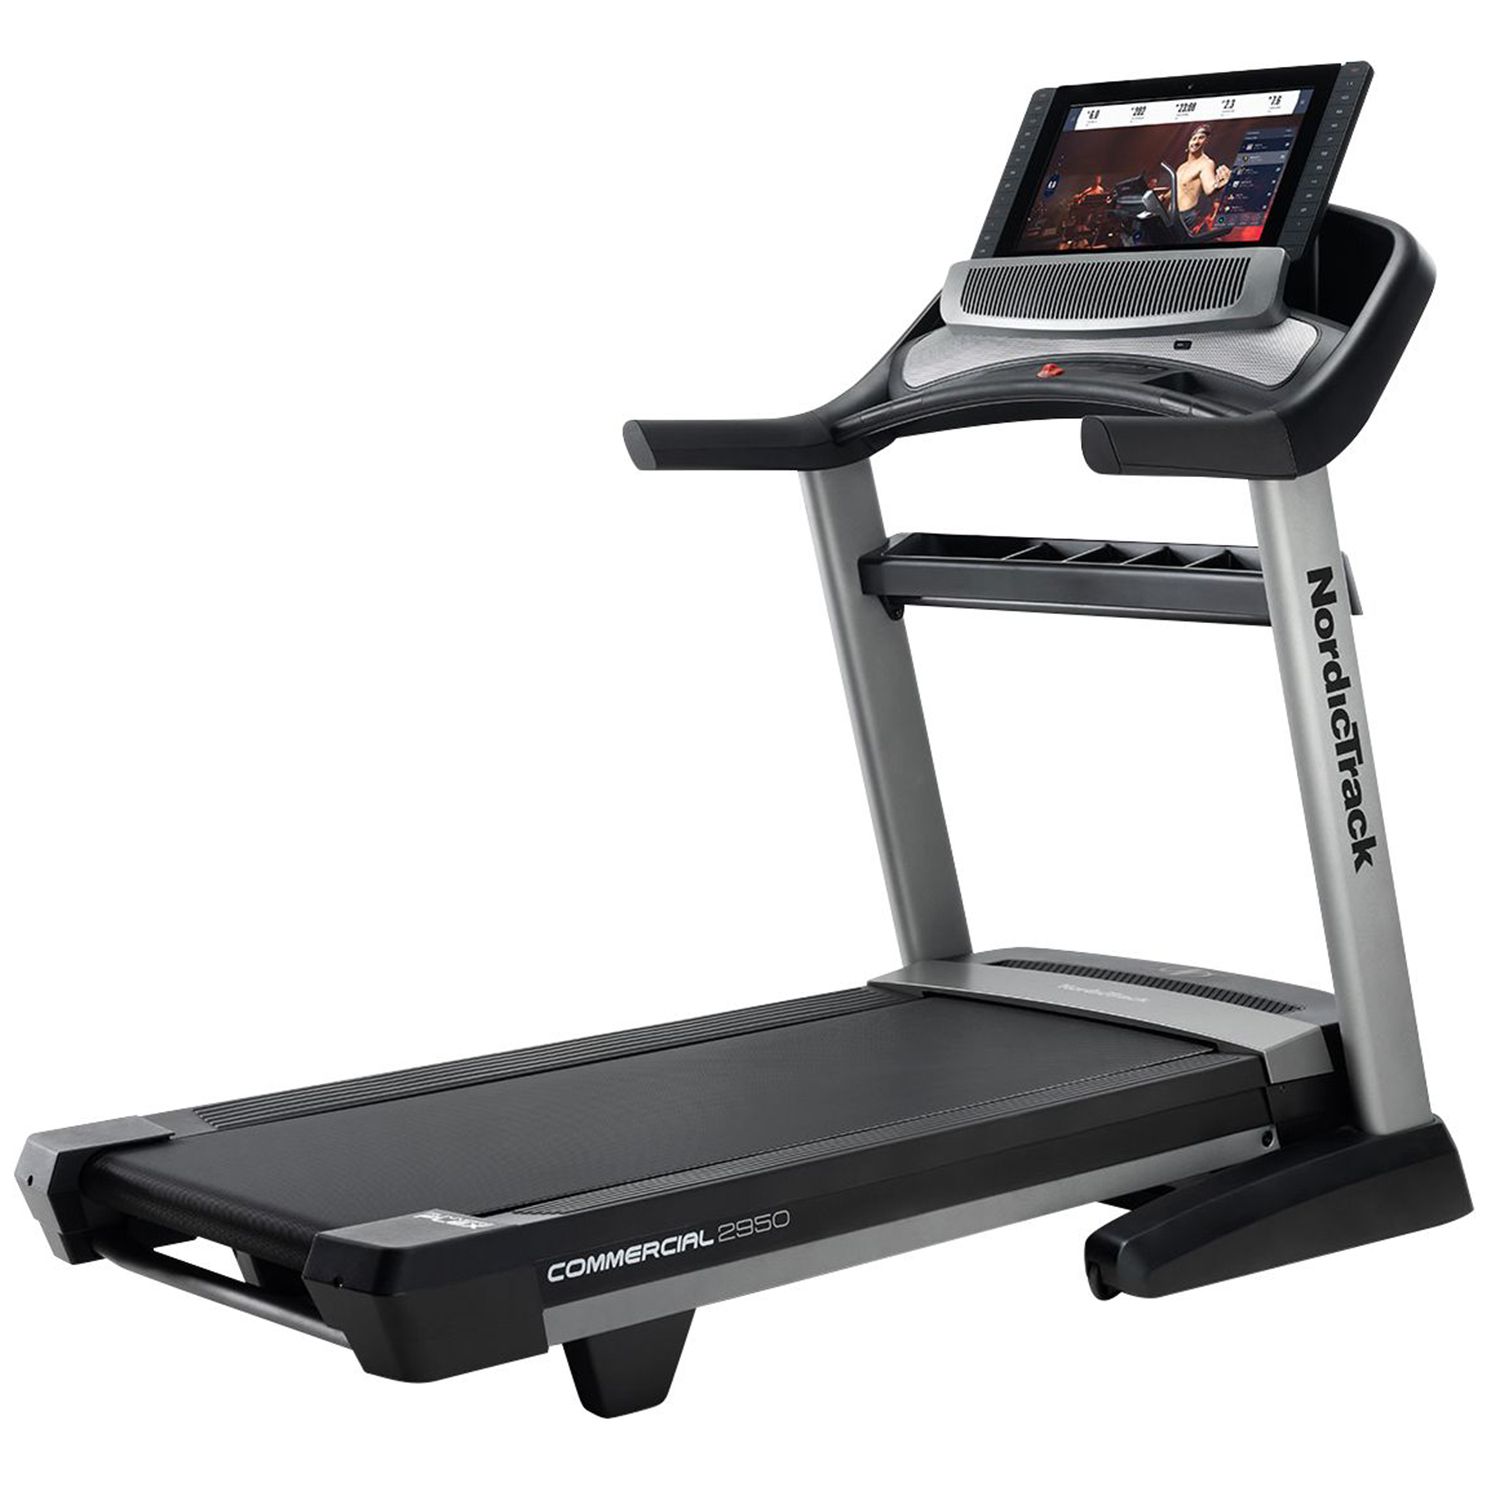 The Best Black Friday Treadmill